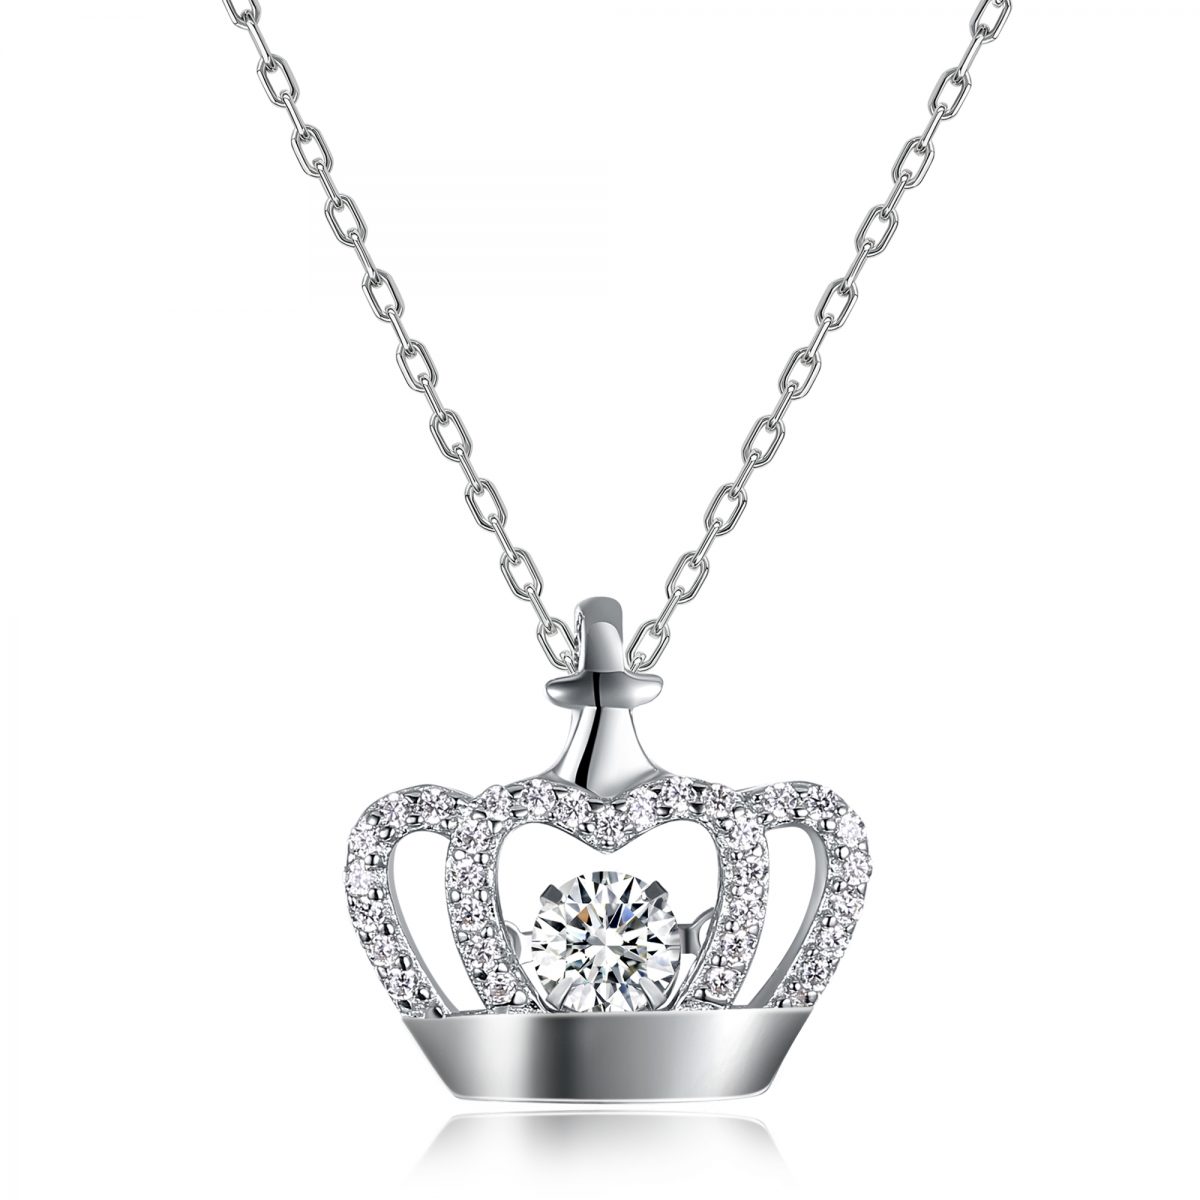 Elan Crown Pendant - Silver